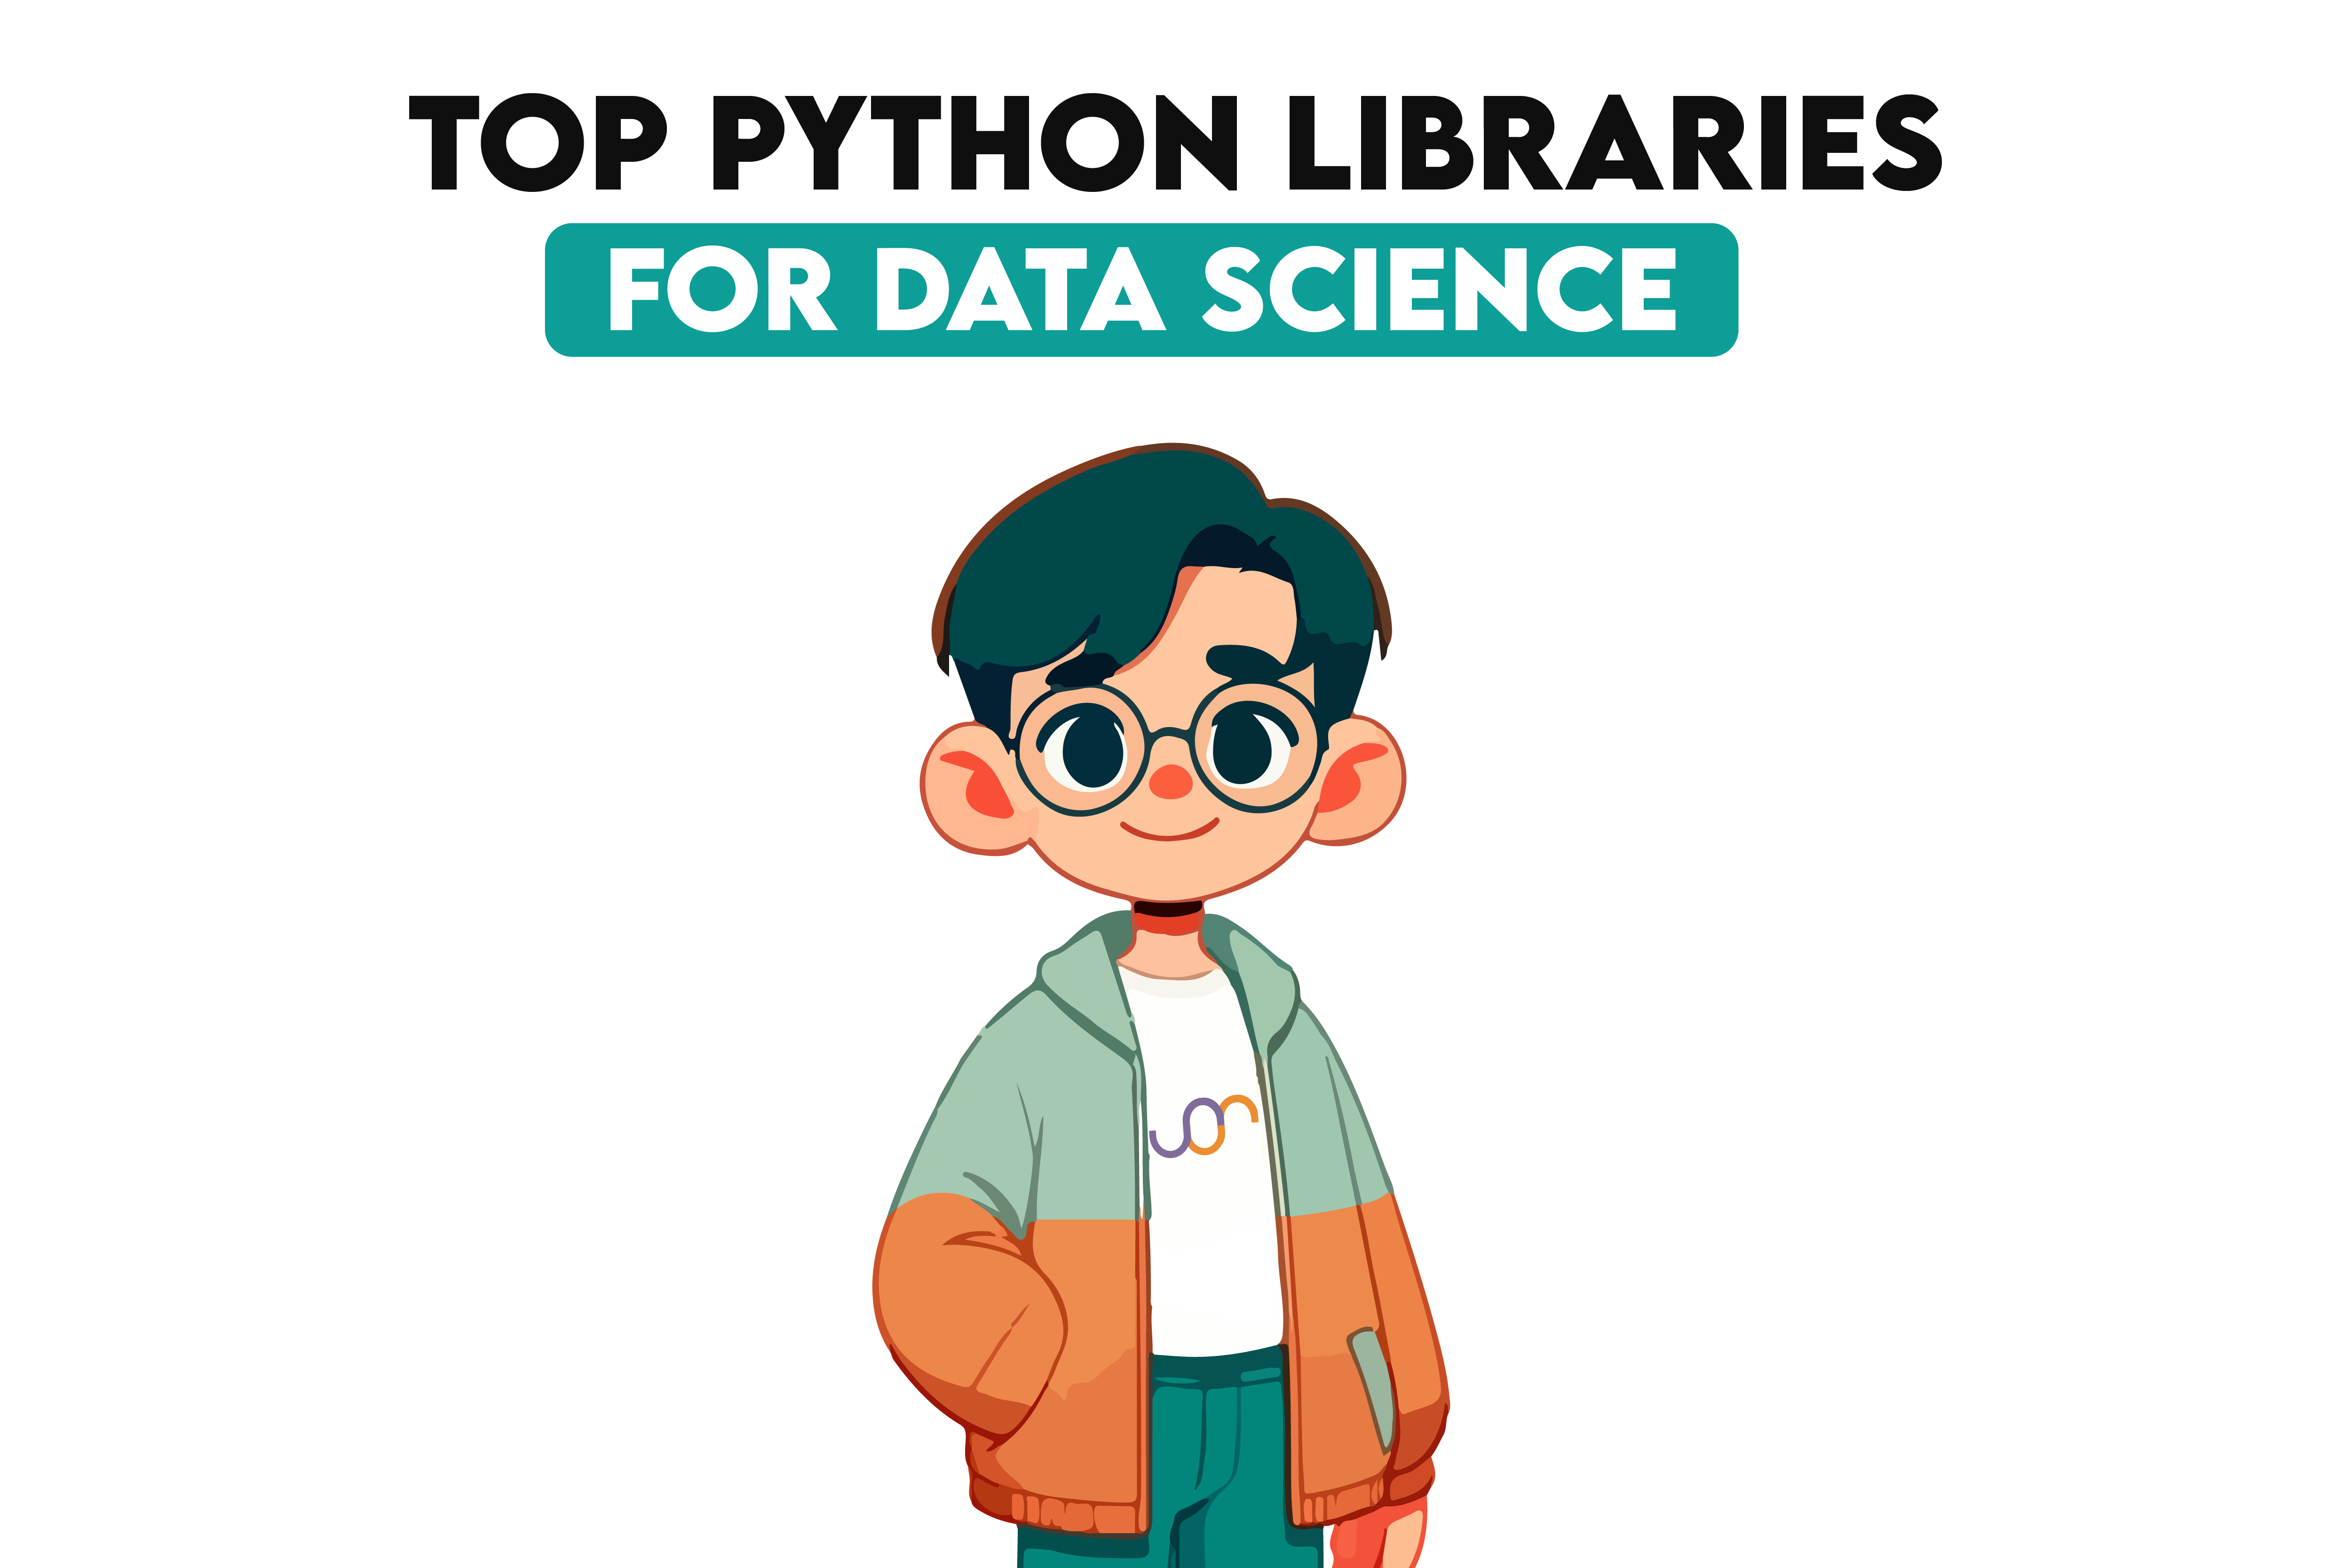 Full Stack Data Scientist